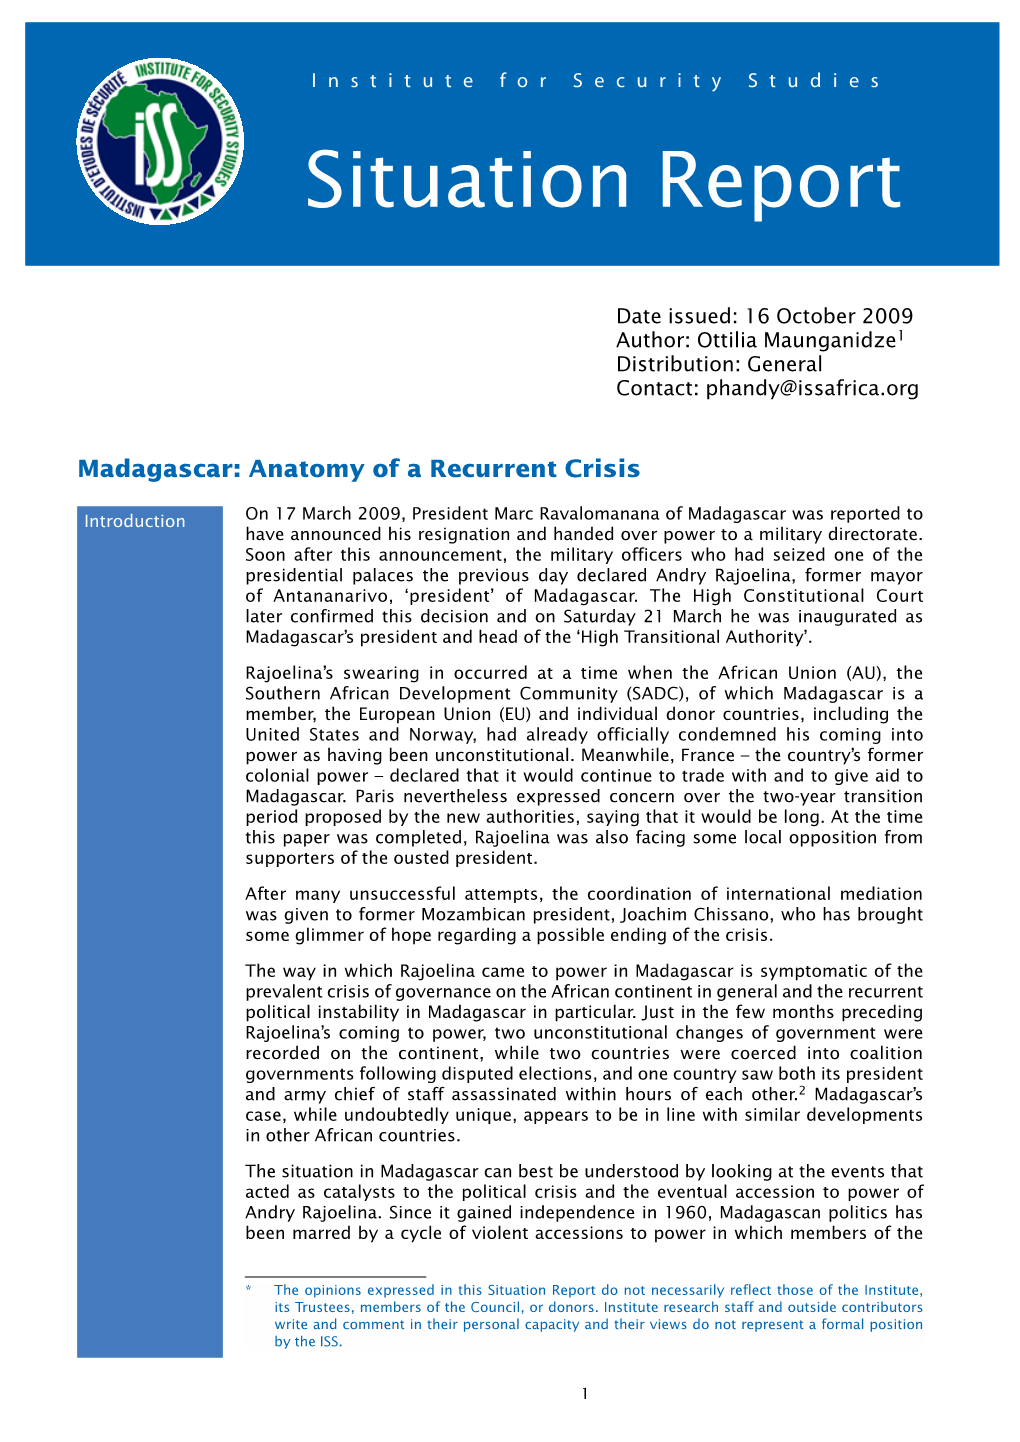 Madagascar: Anatomy of a Recurrent Crisis